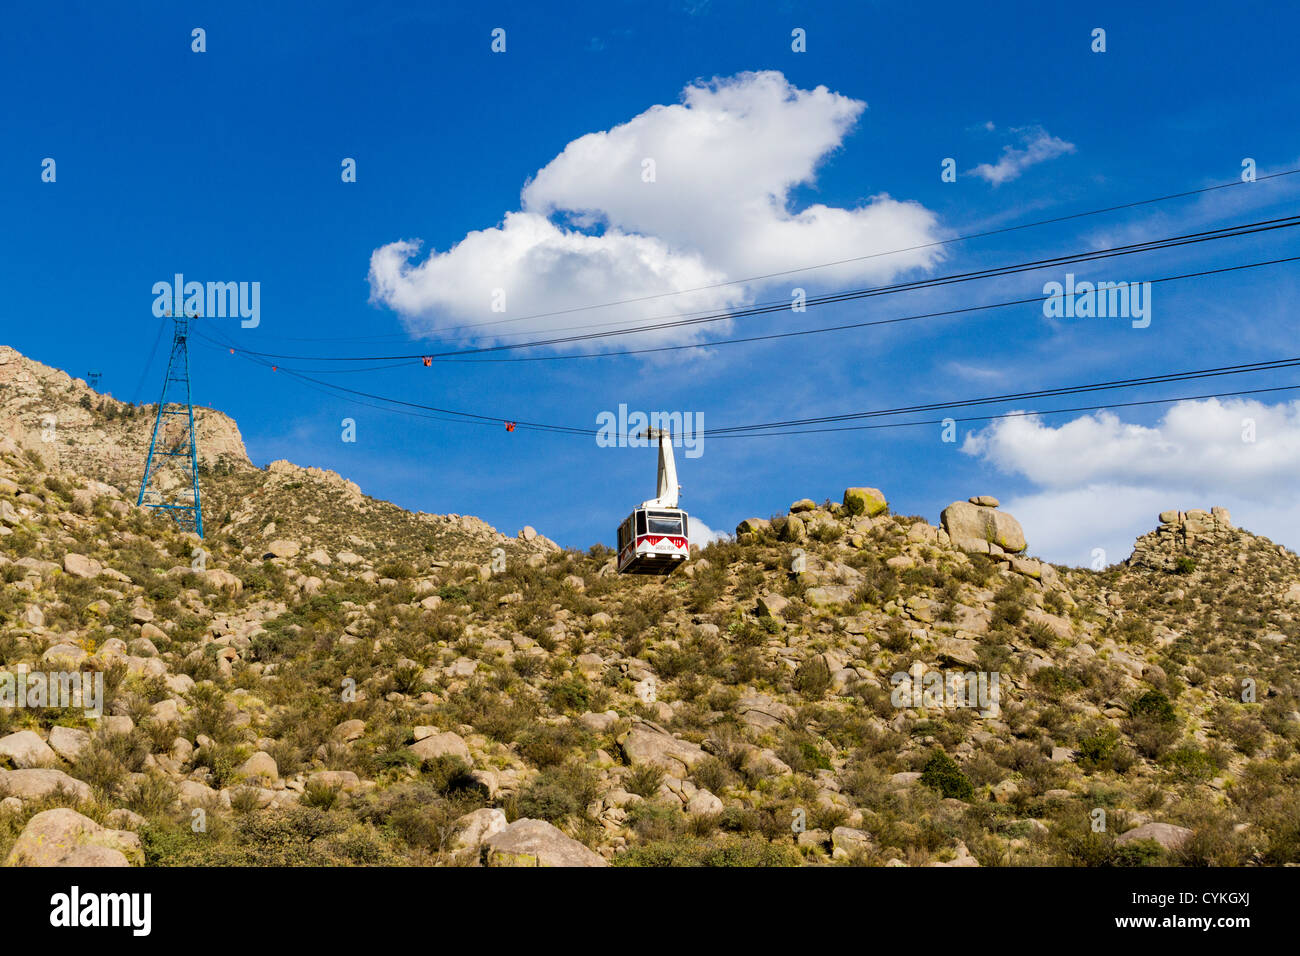 Sandia Peak Aerial Tramway at Sandia Peak in the Cibola National Forest at Albuquerque, New Mexico. Stock Photo